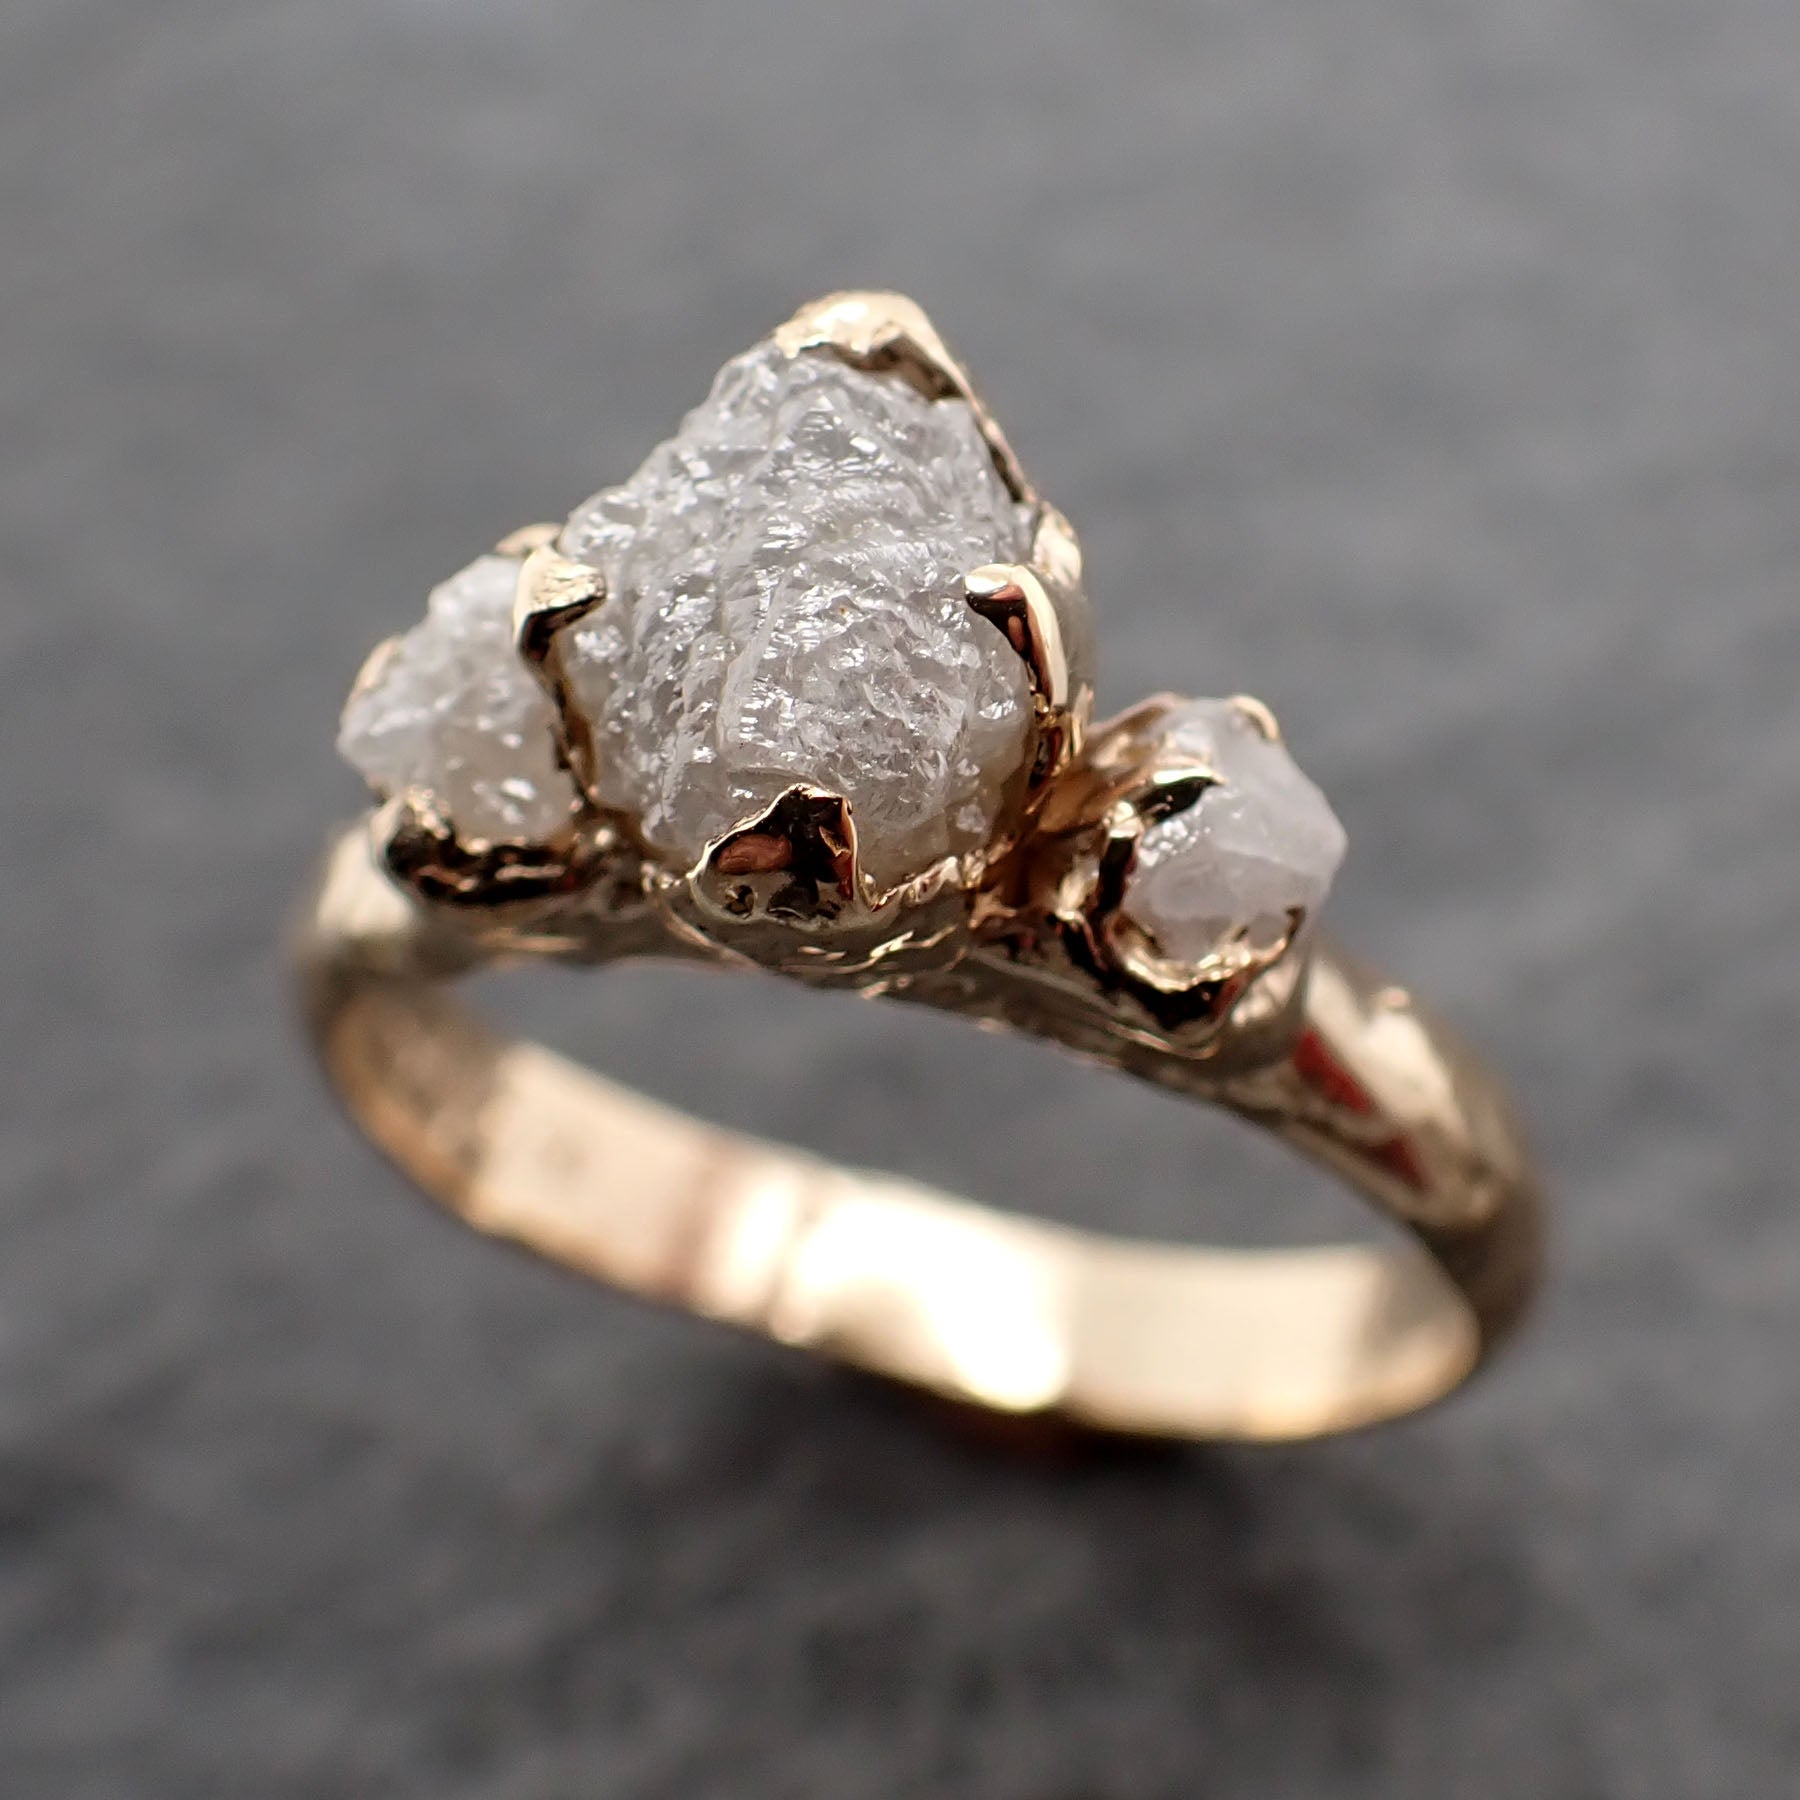 raw rough diamond engagement stacking multi stone wedding anniversary 14k gold ring rustic 2495 Alternative Engagement